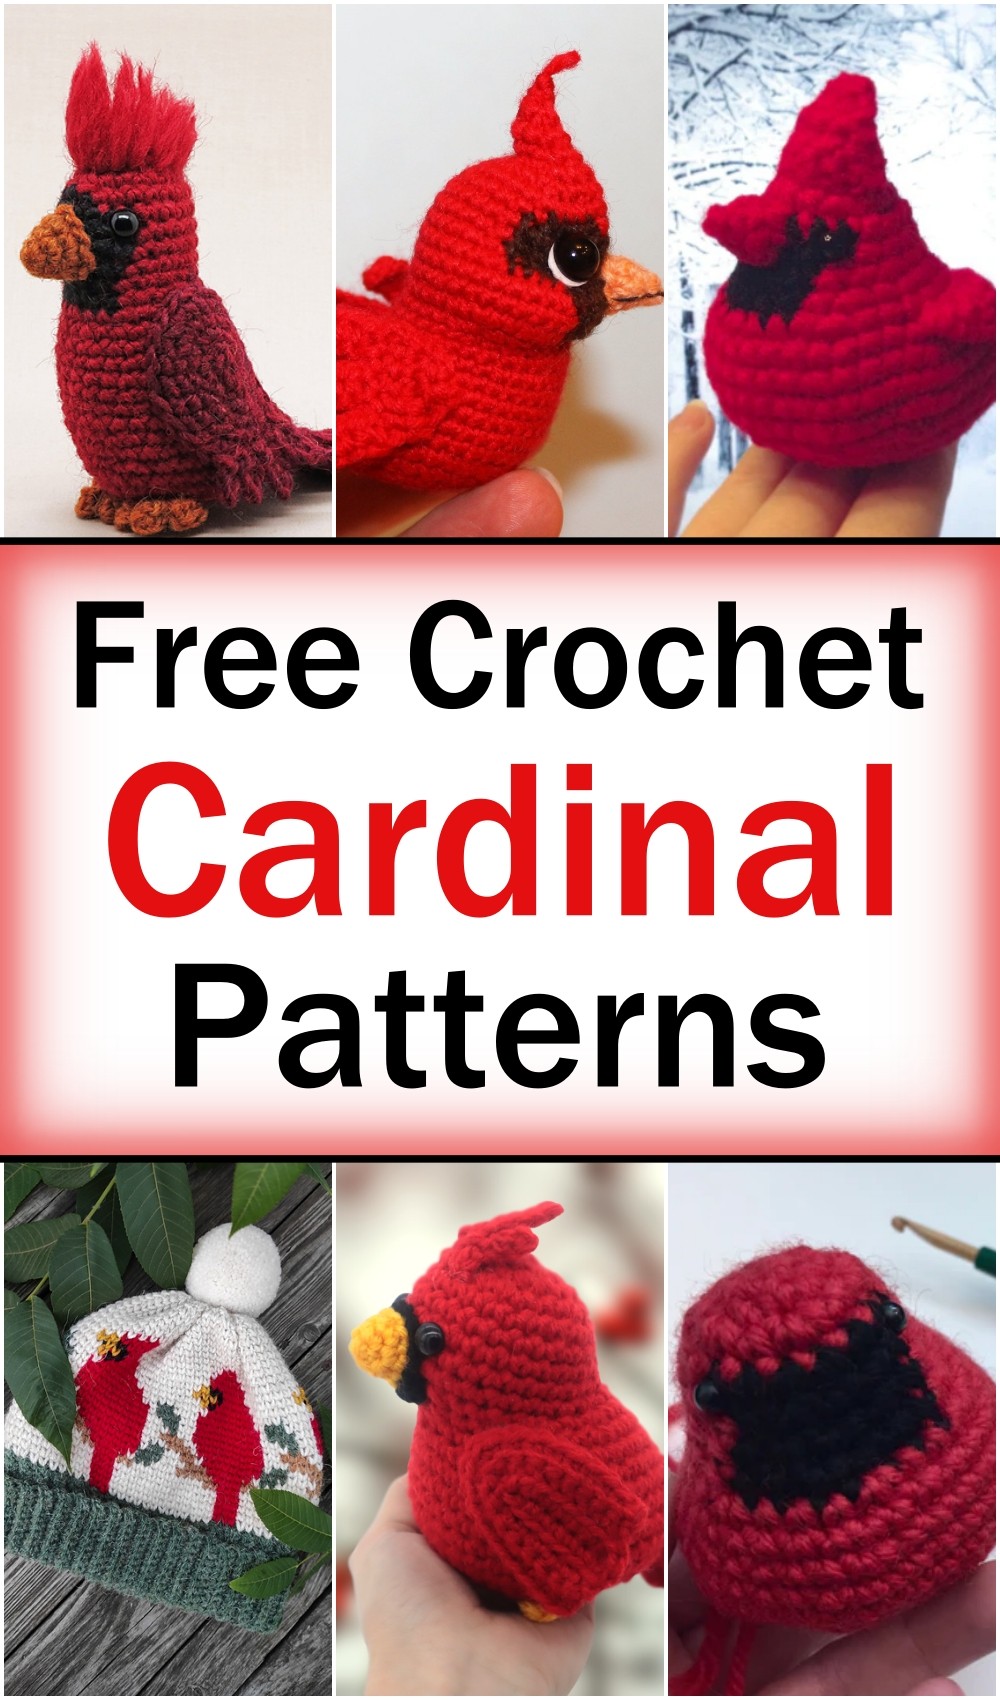 Free Crochet Cardinal Patterns